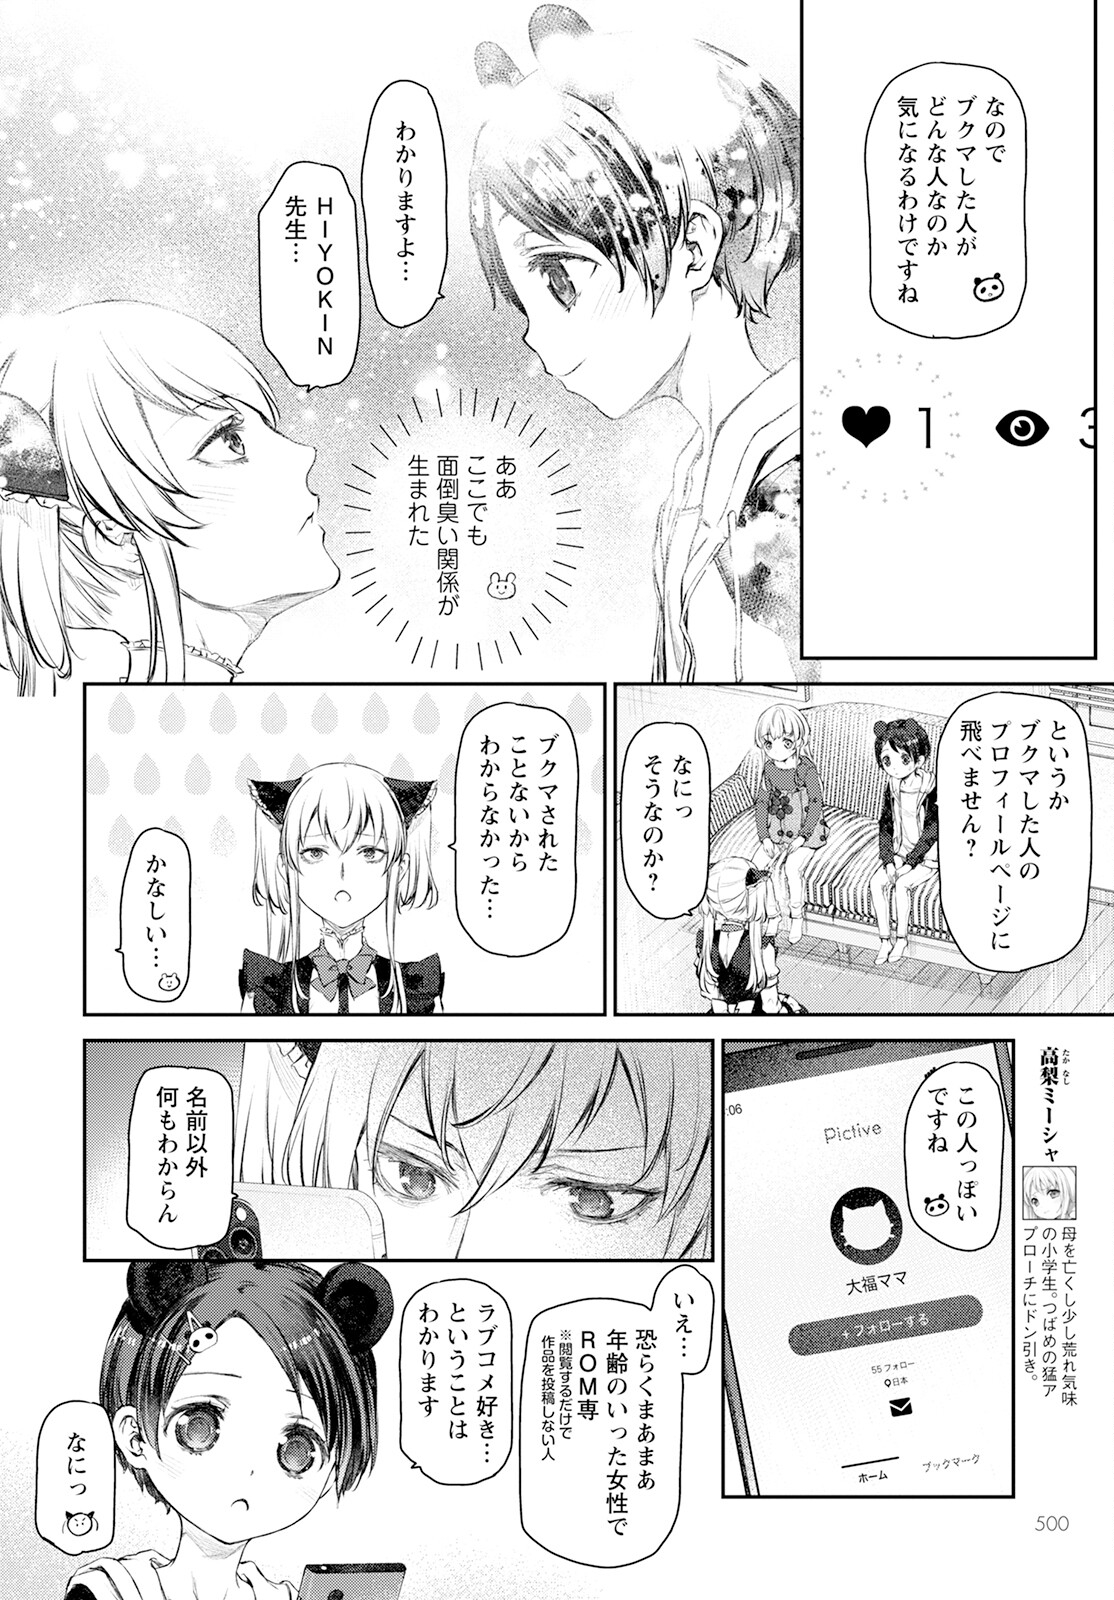 Uchi no Maid ga Uzasugiru! - Chapter 56 - Page 4